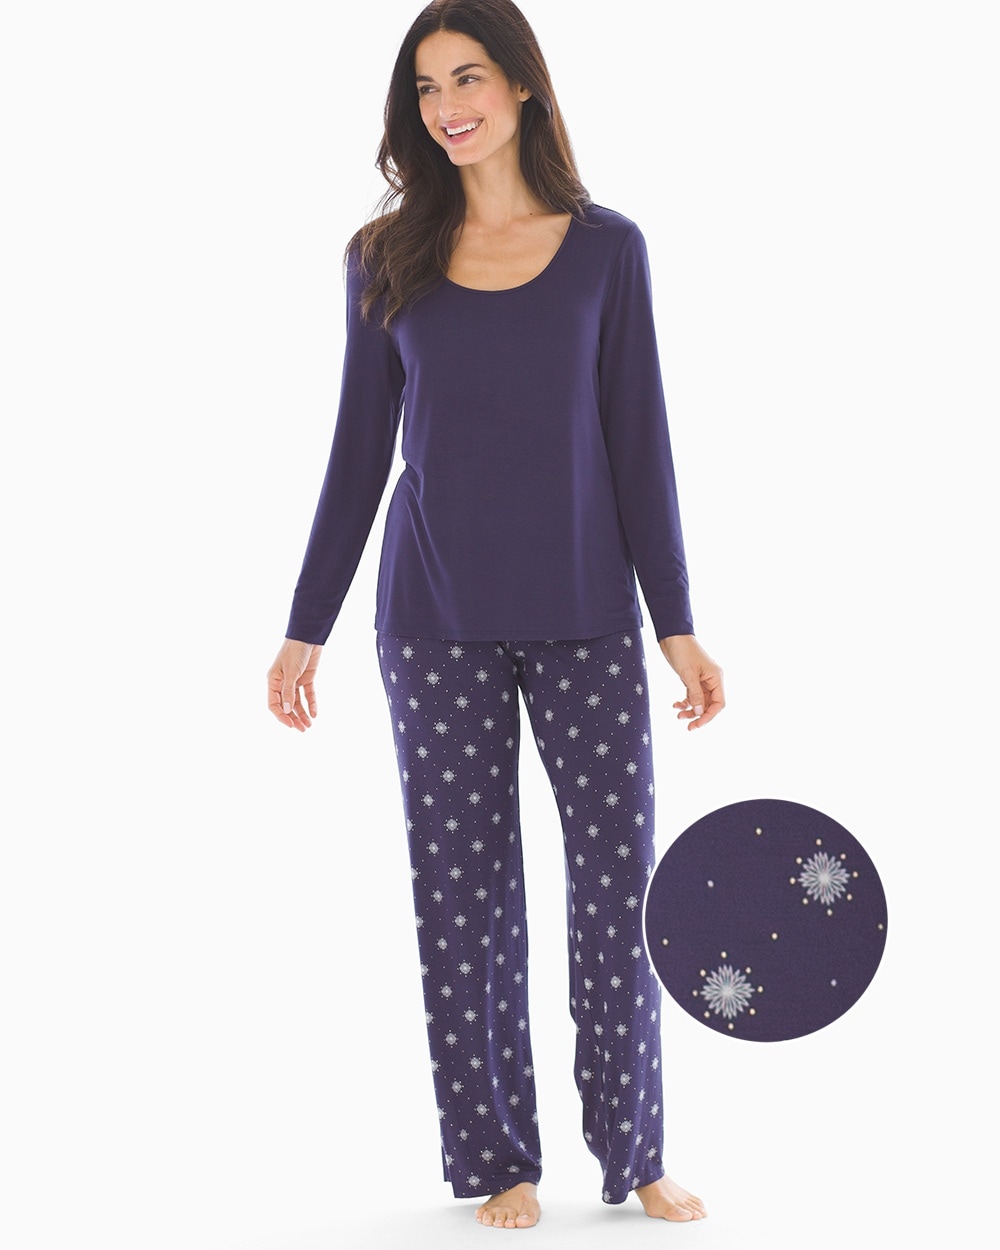 Cool Nights Long Sleeve Pajama Set Snowflakes with Navy RG - Soma